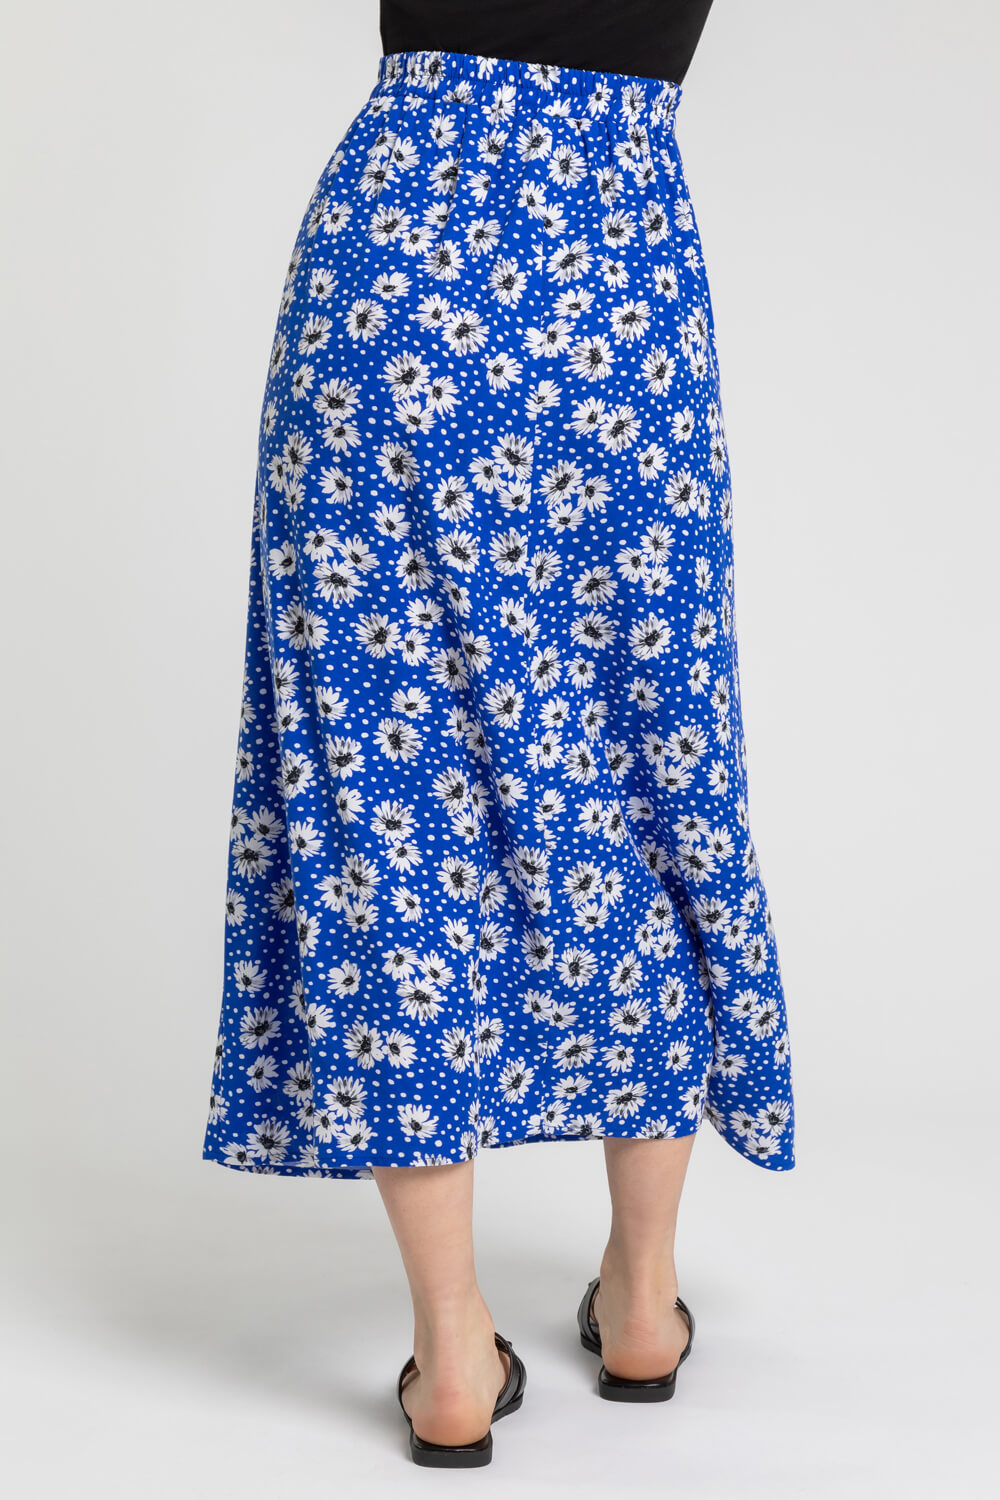 Petite Floral Print A-Line Skirt in Blue - Roman Originals UK